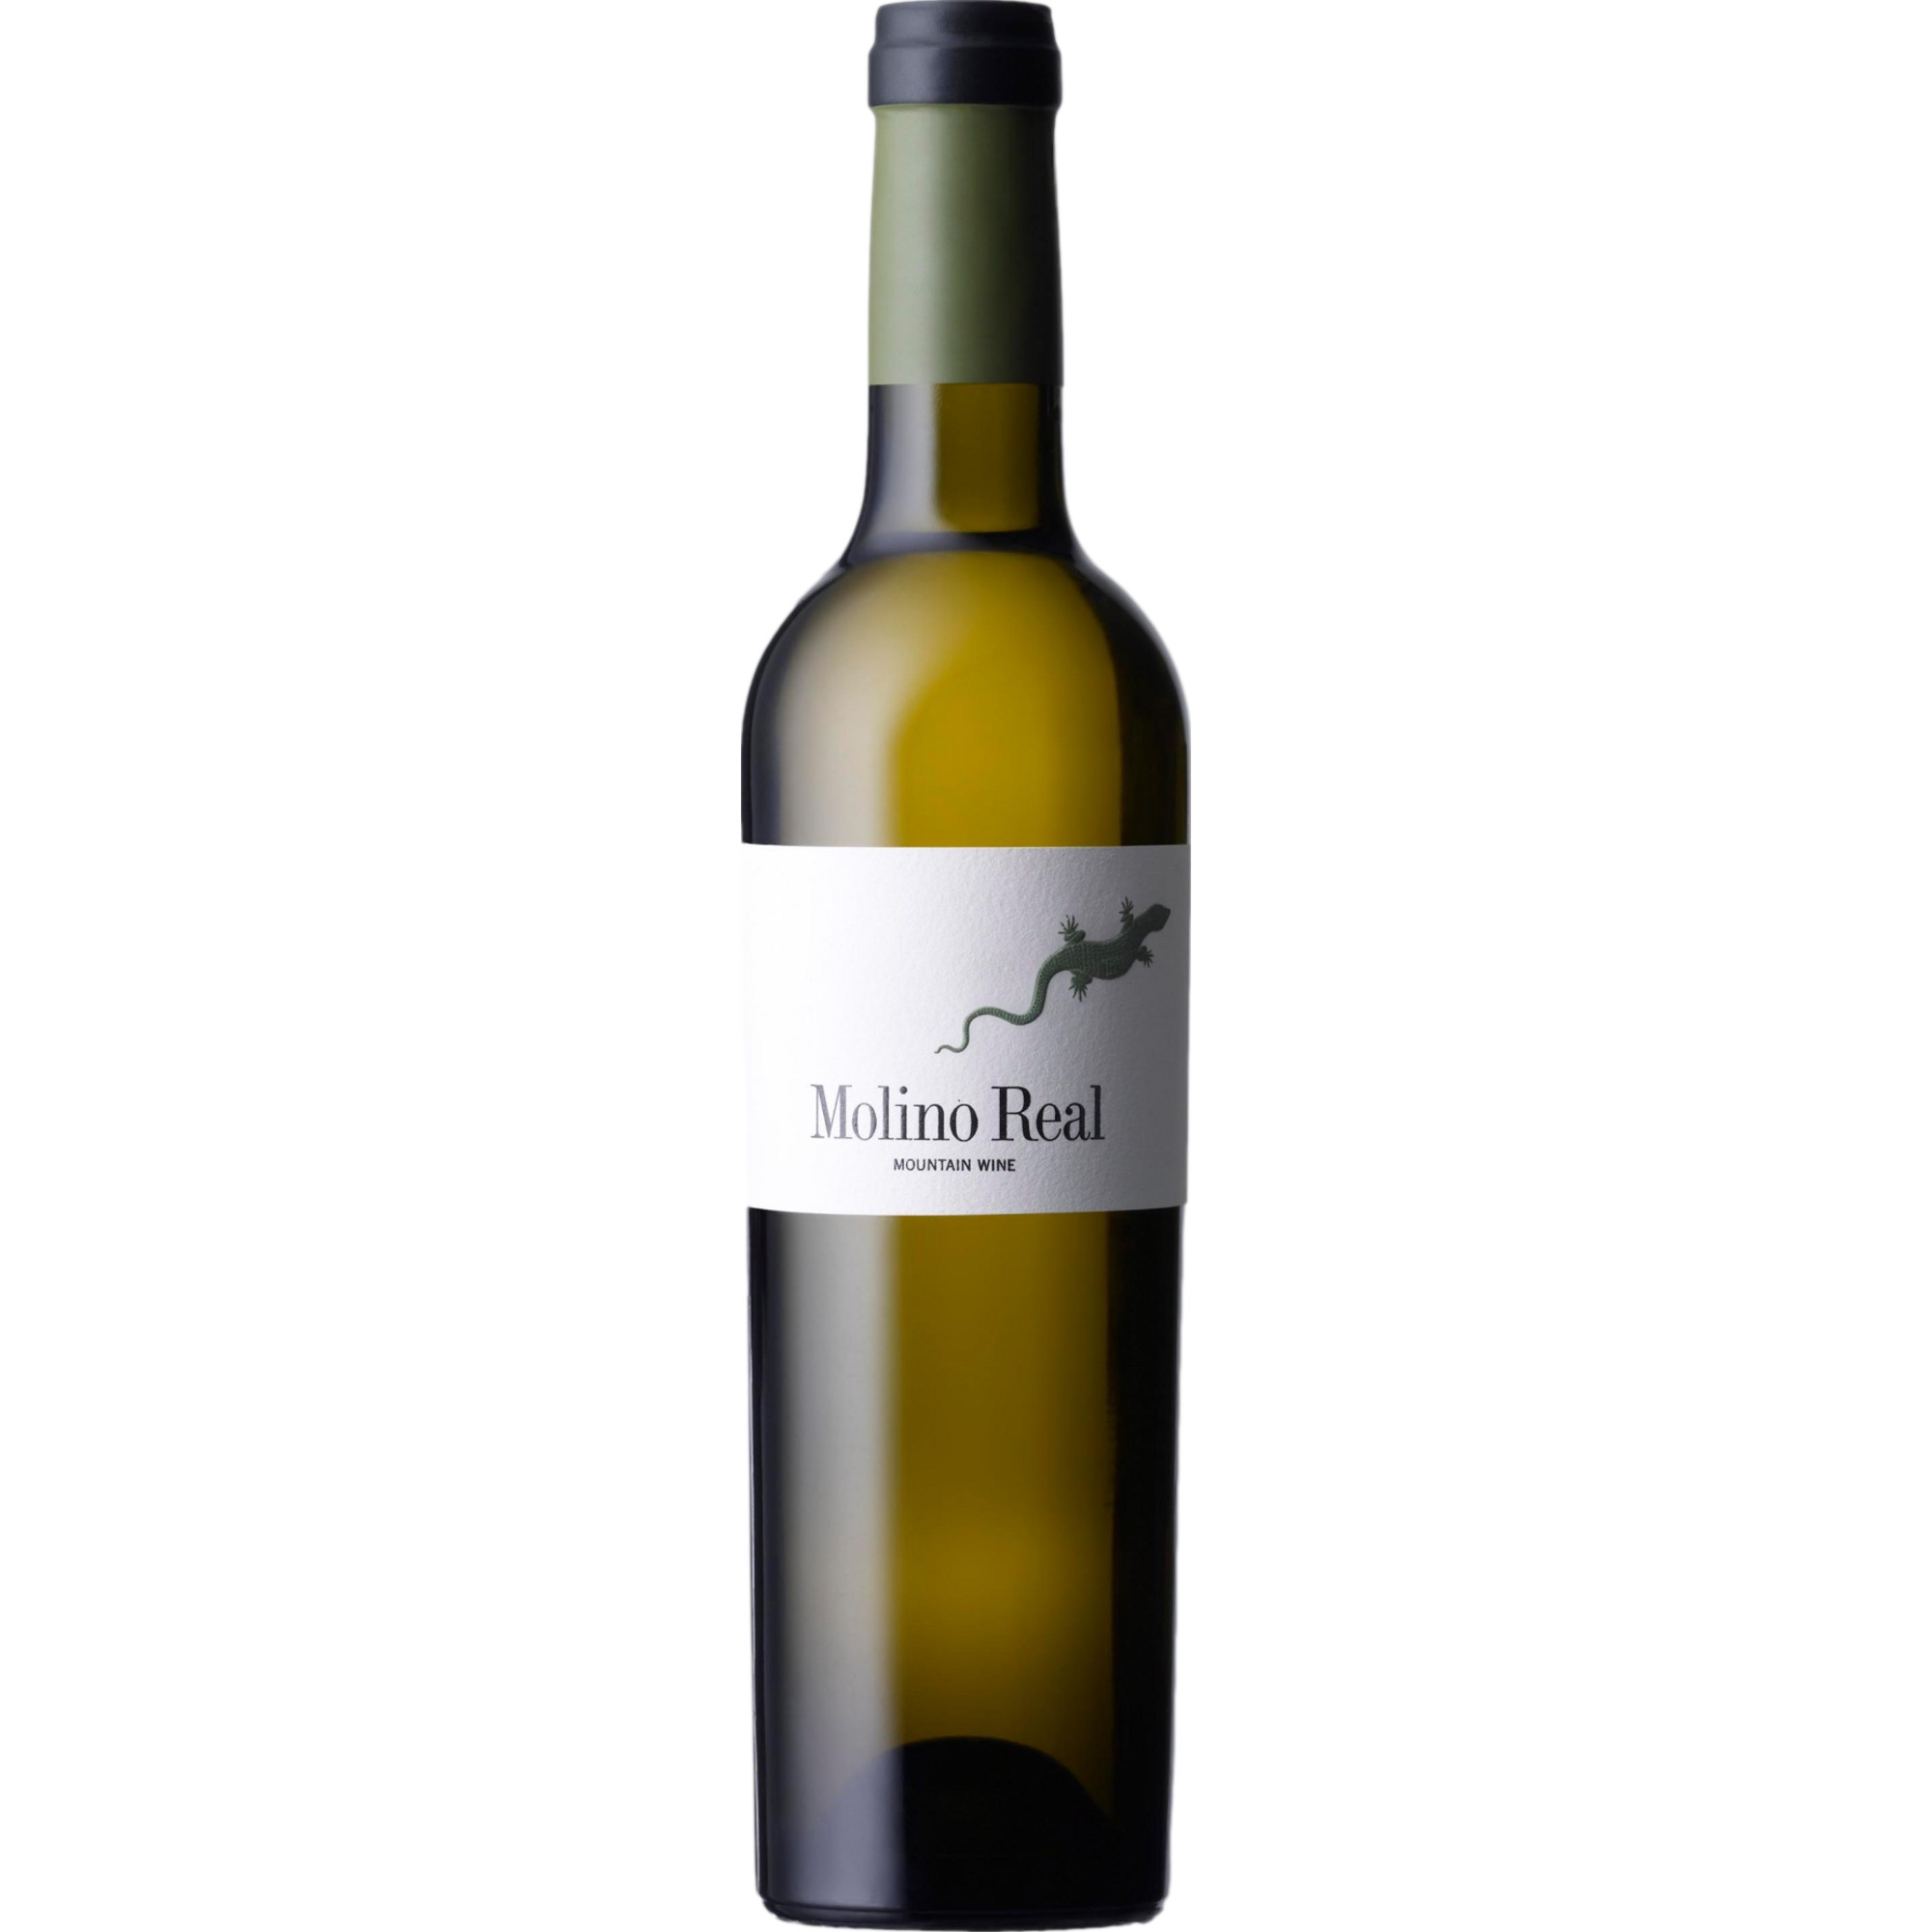 2017 Molino Real - Mountain Wine Molino Real